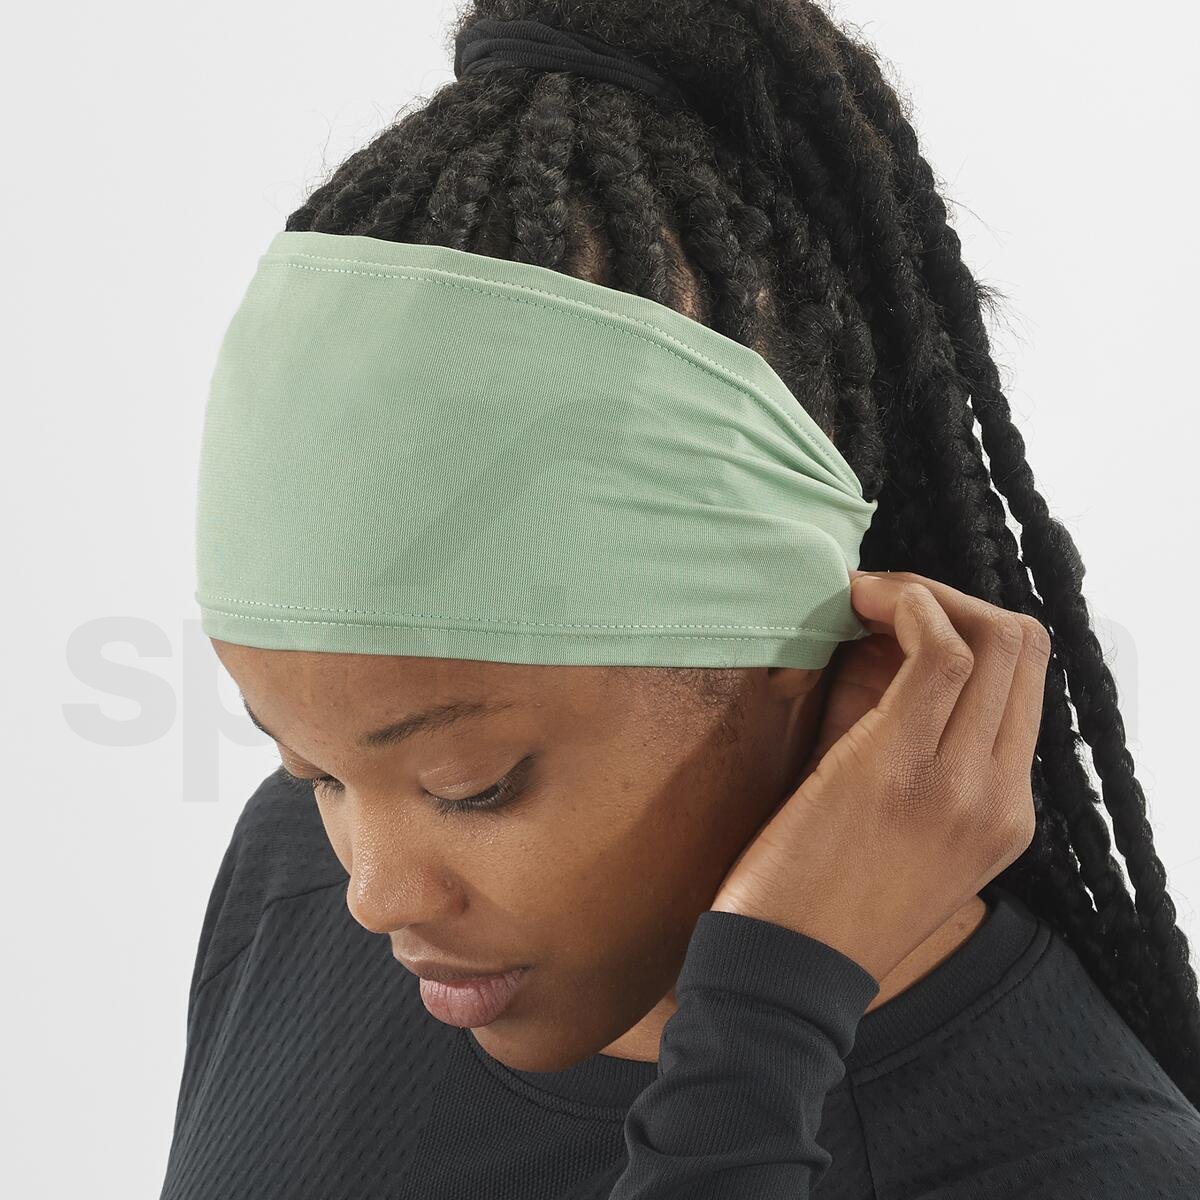 Čelenka Salomon Sense Headband - zelená